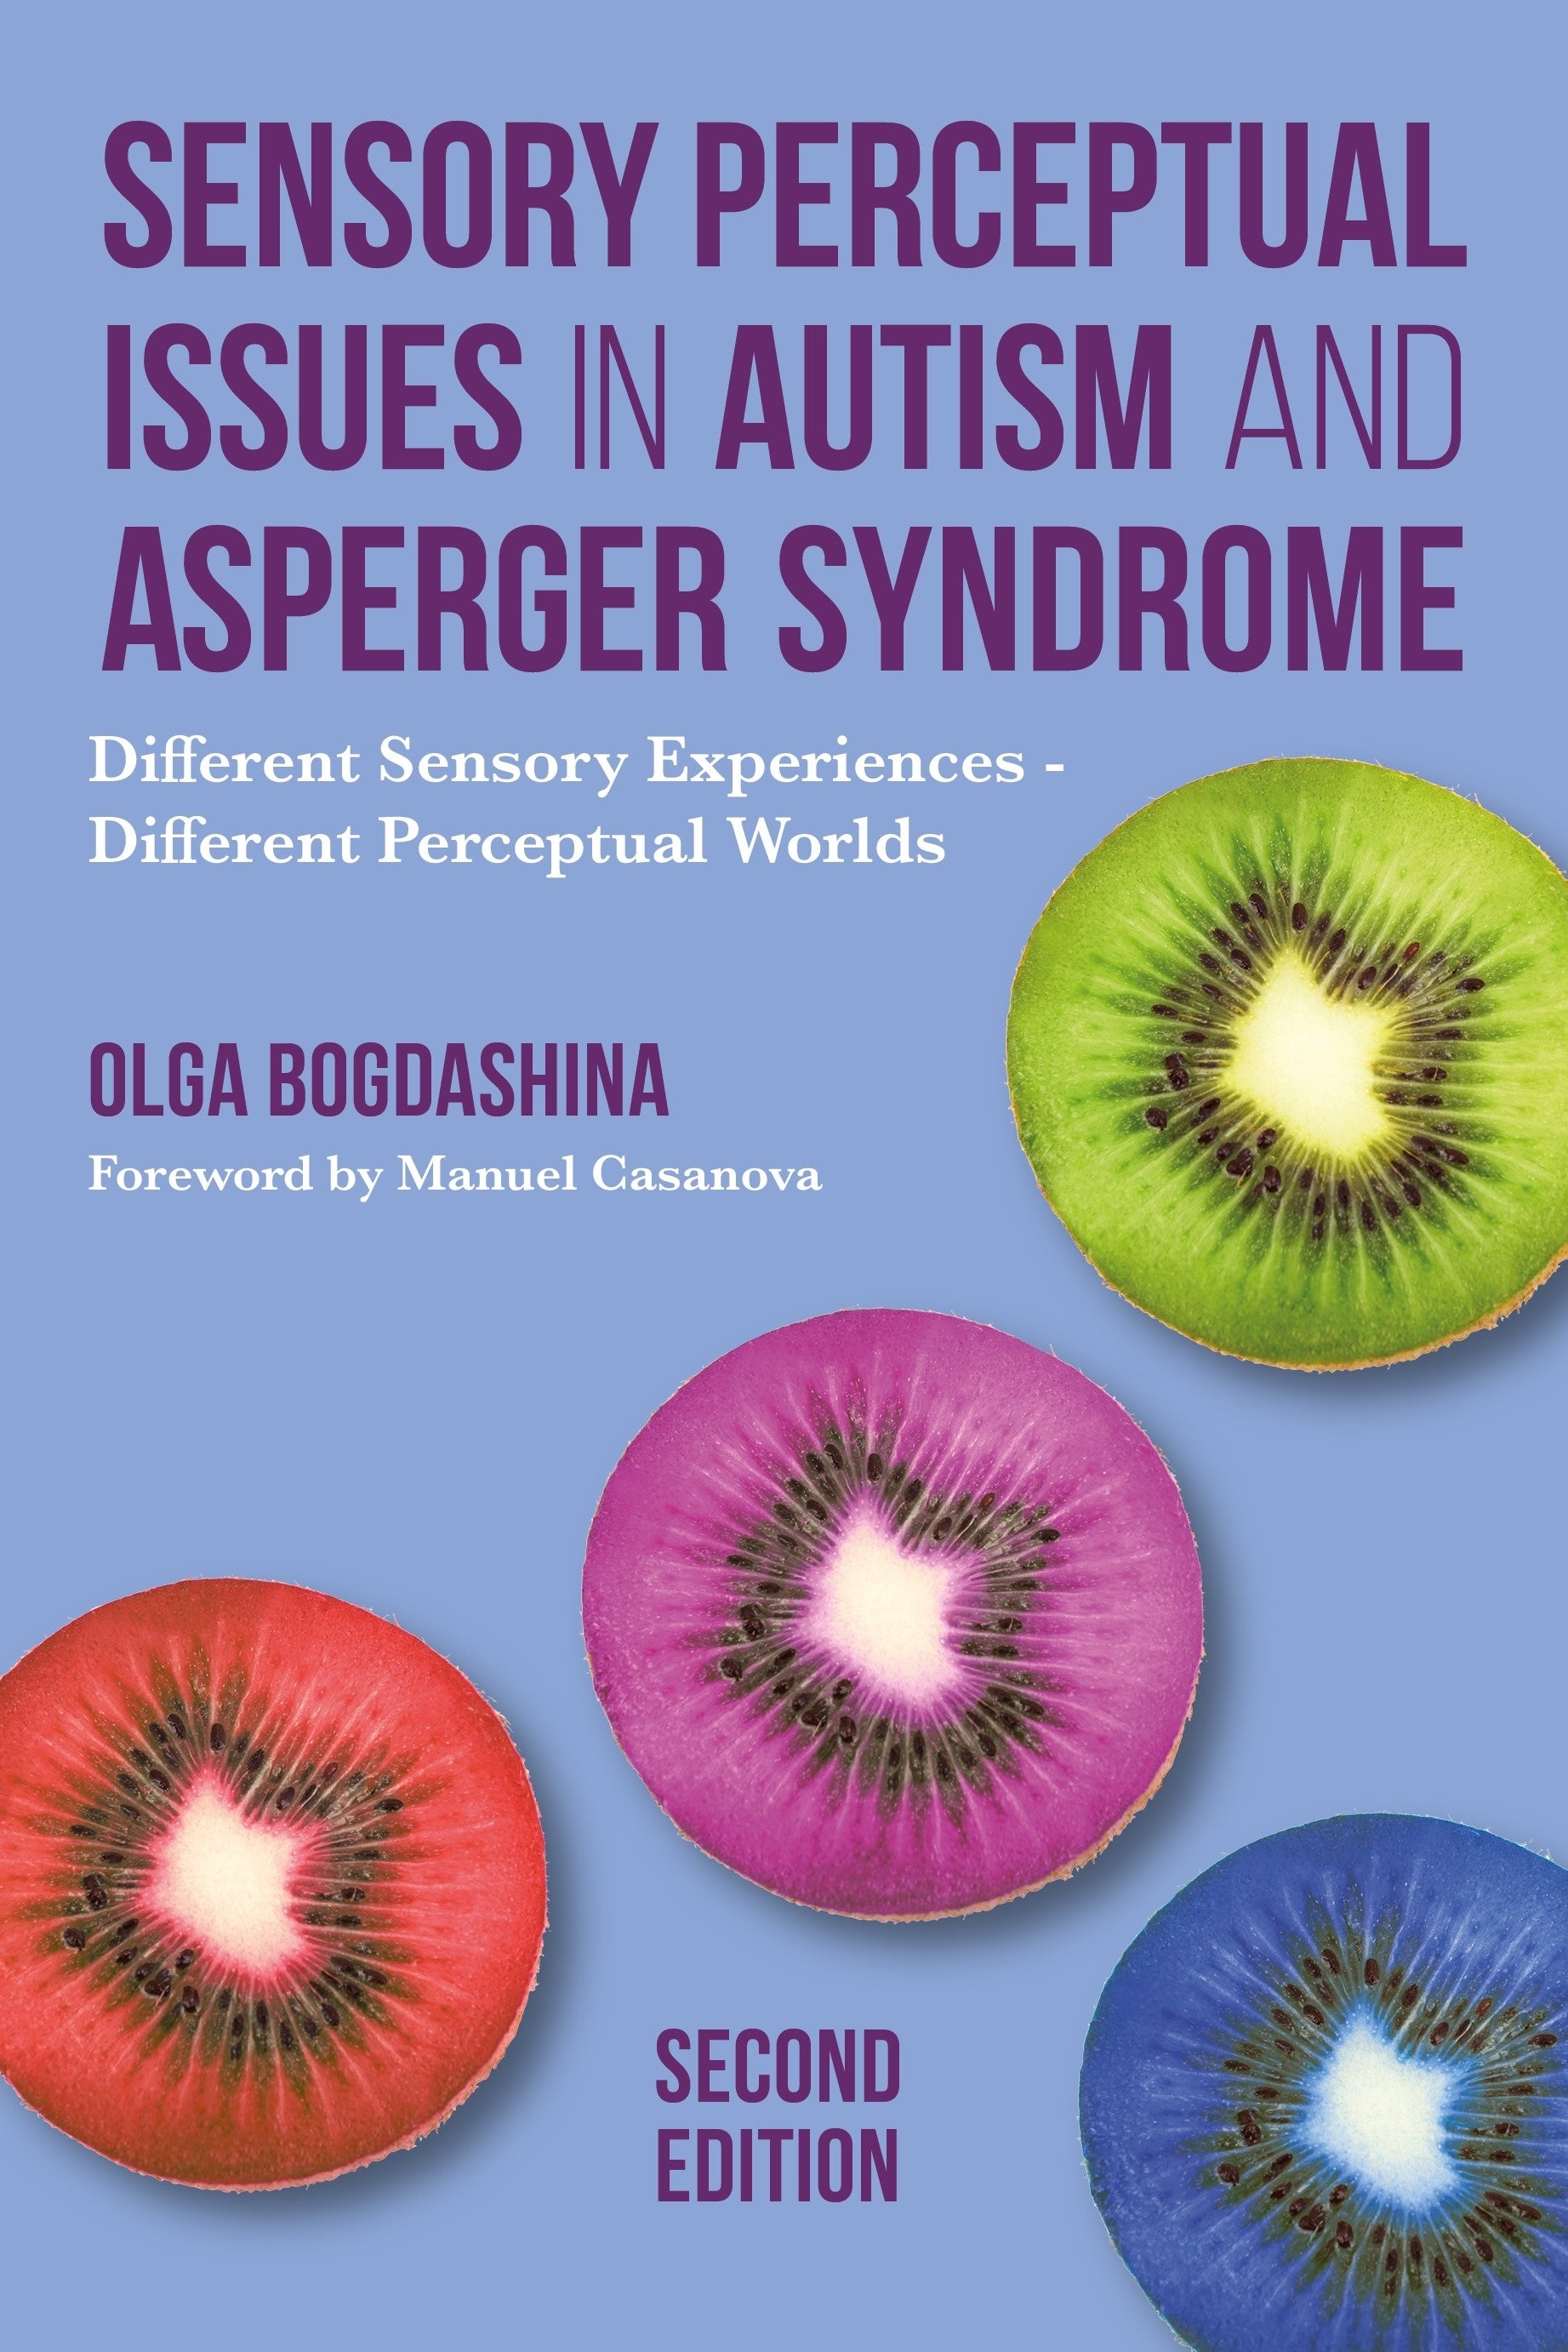 Sensory Perceptual Issues in Autism and Asperger Syndrome, Second Edition by Olga Bogdashina, Manuel Casanova